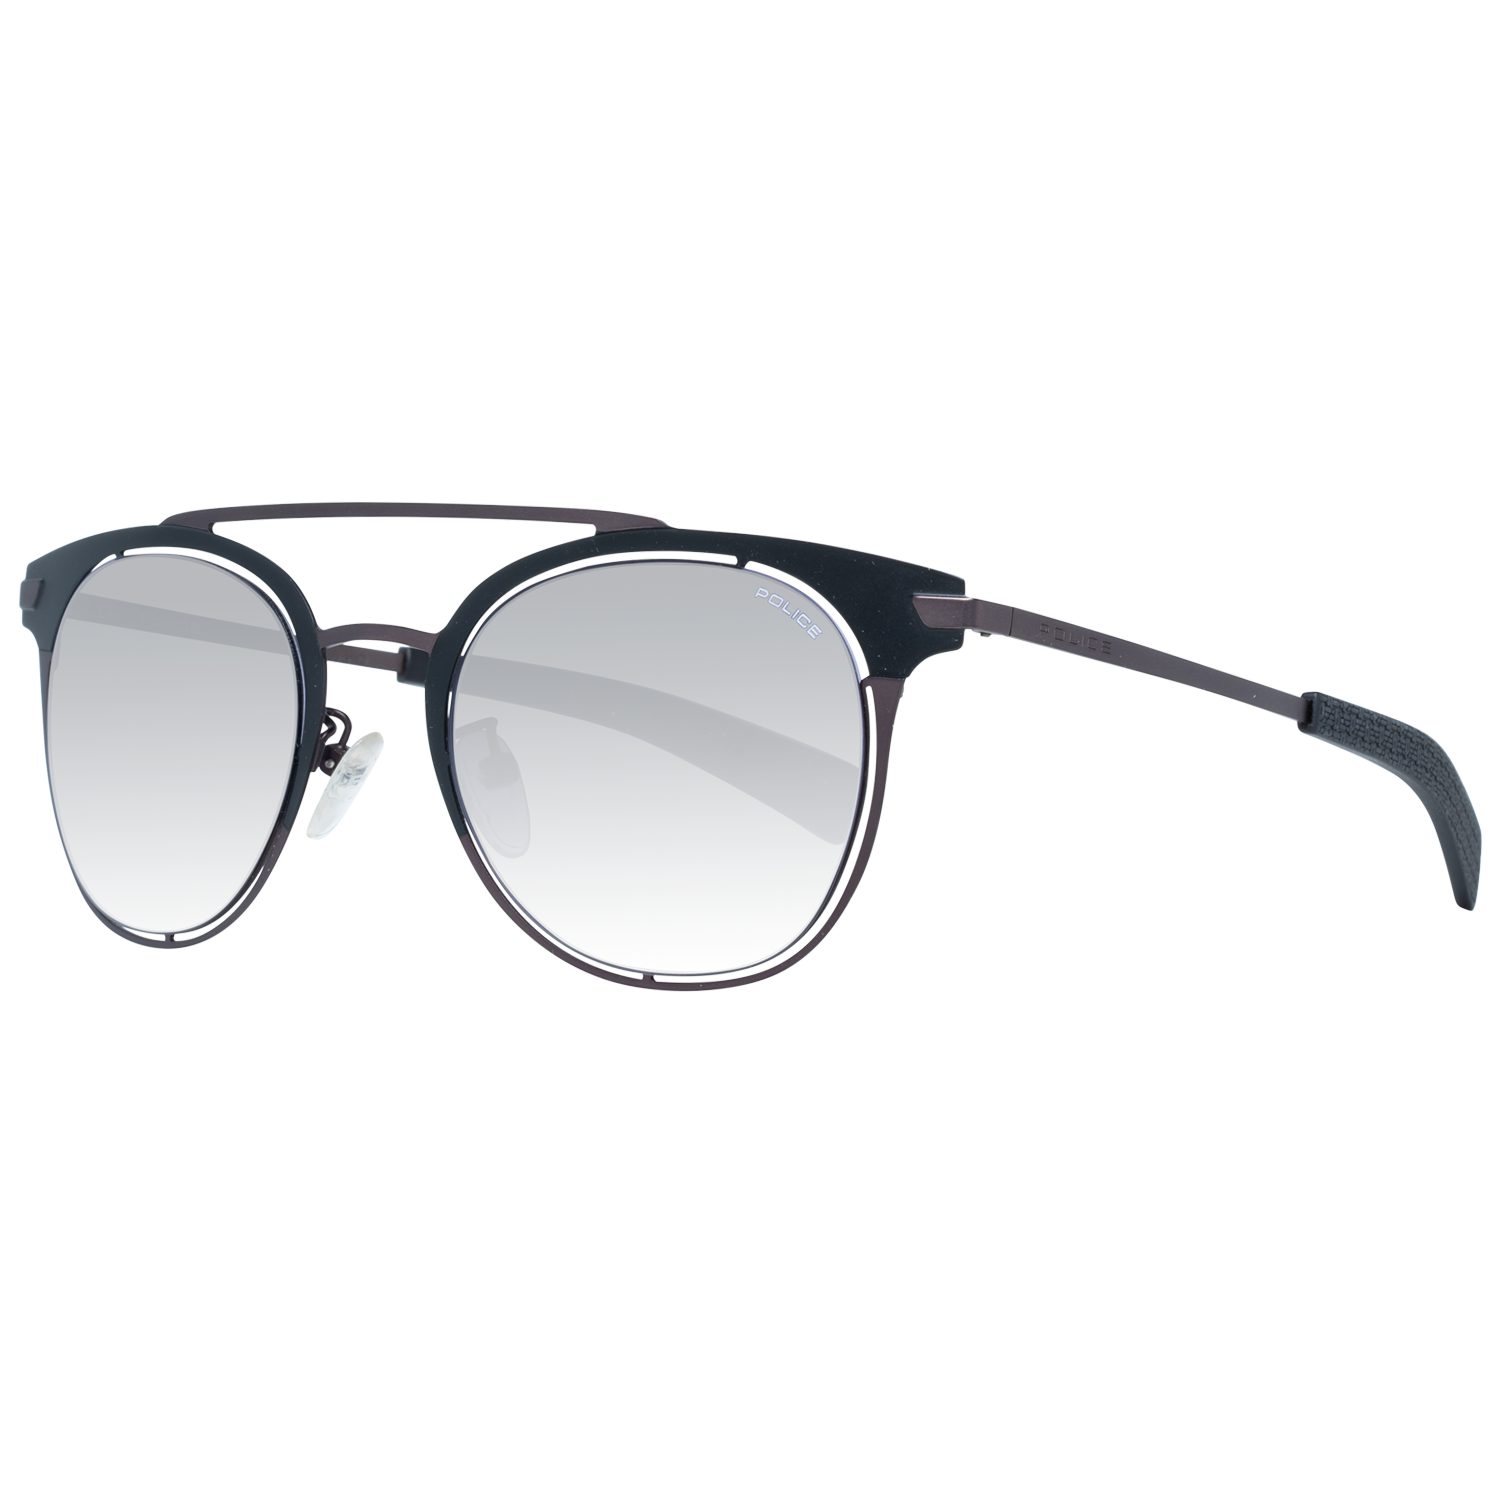 Police Sunglasses Police Sunglasses SPL158 0531 49 Eyeglasses Eyewear UK USA Australia 